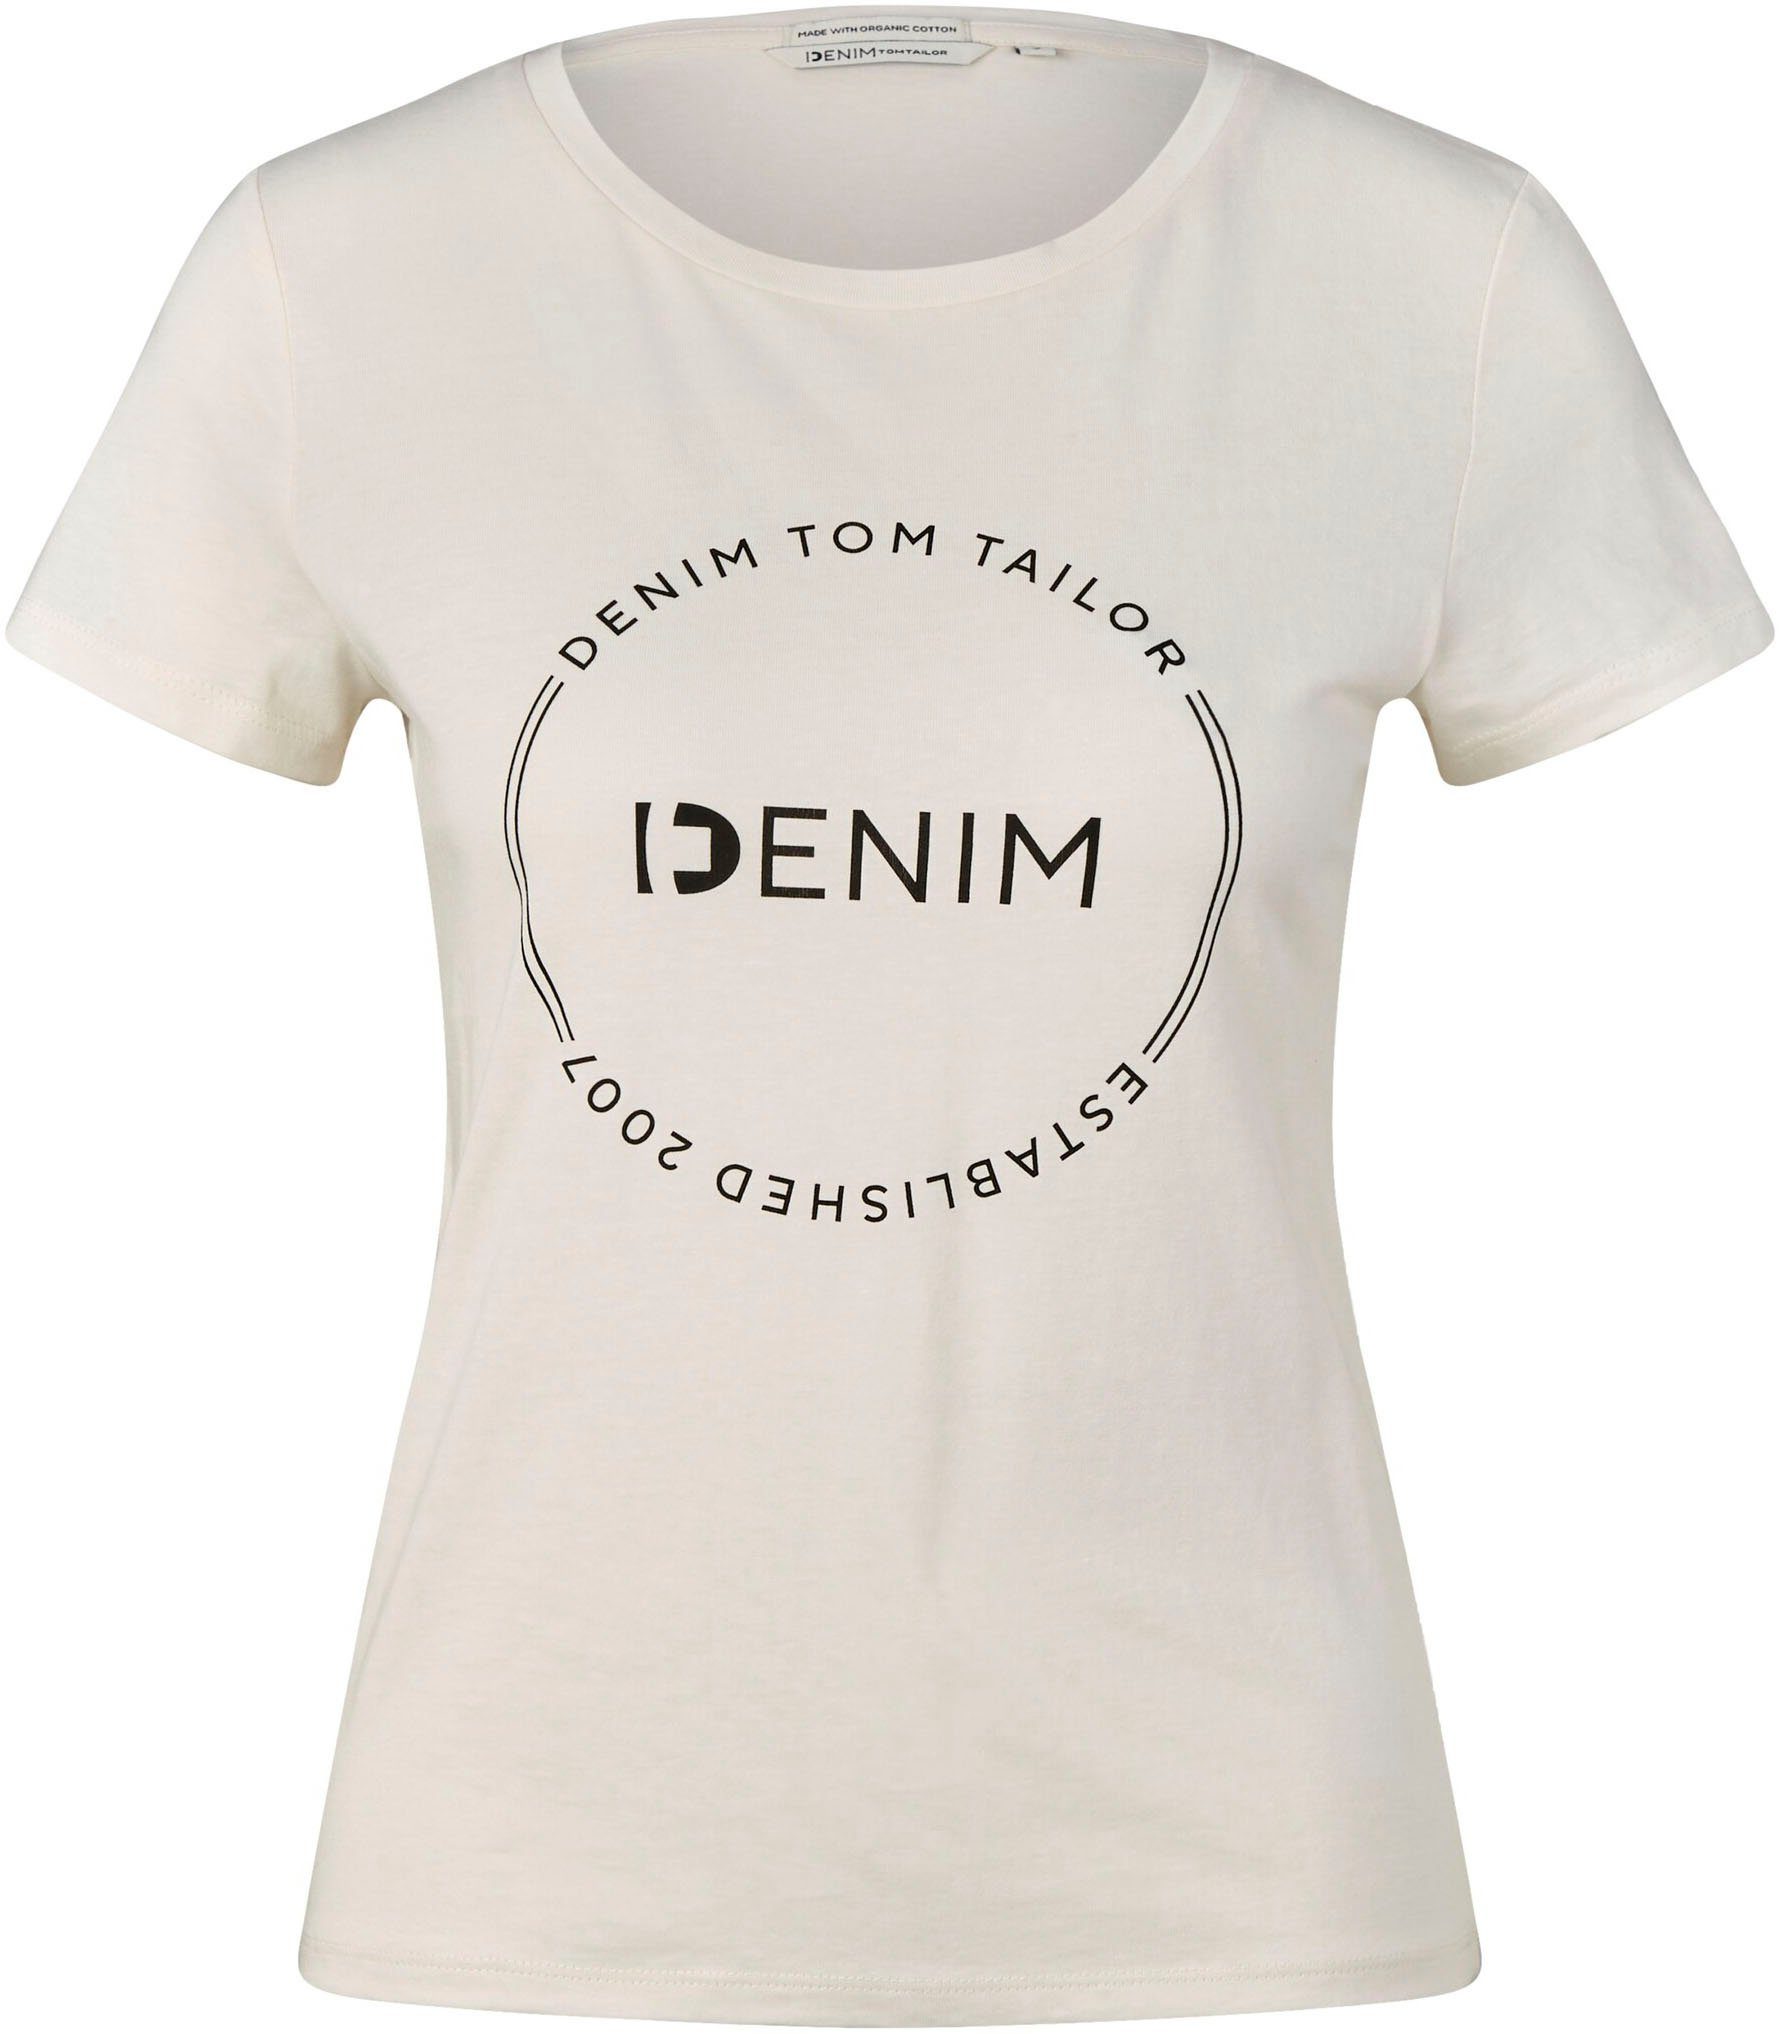 TOM TAILOR weiß T-Shirt Denim